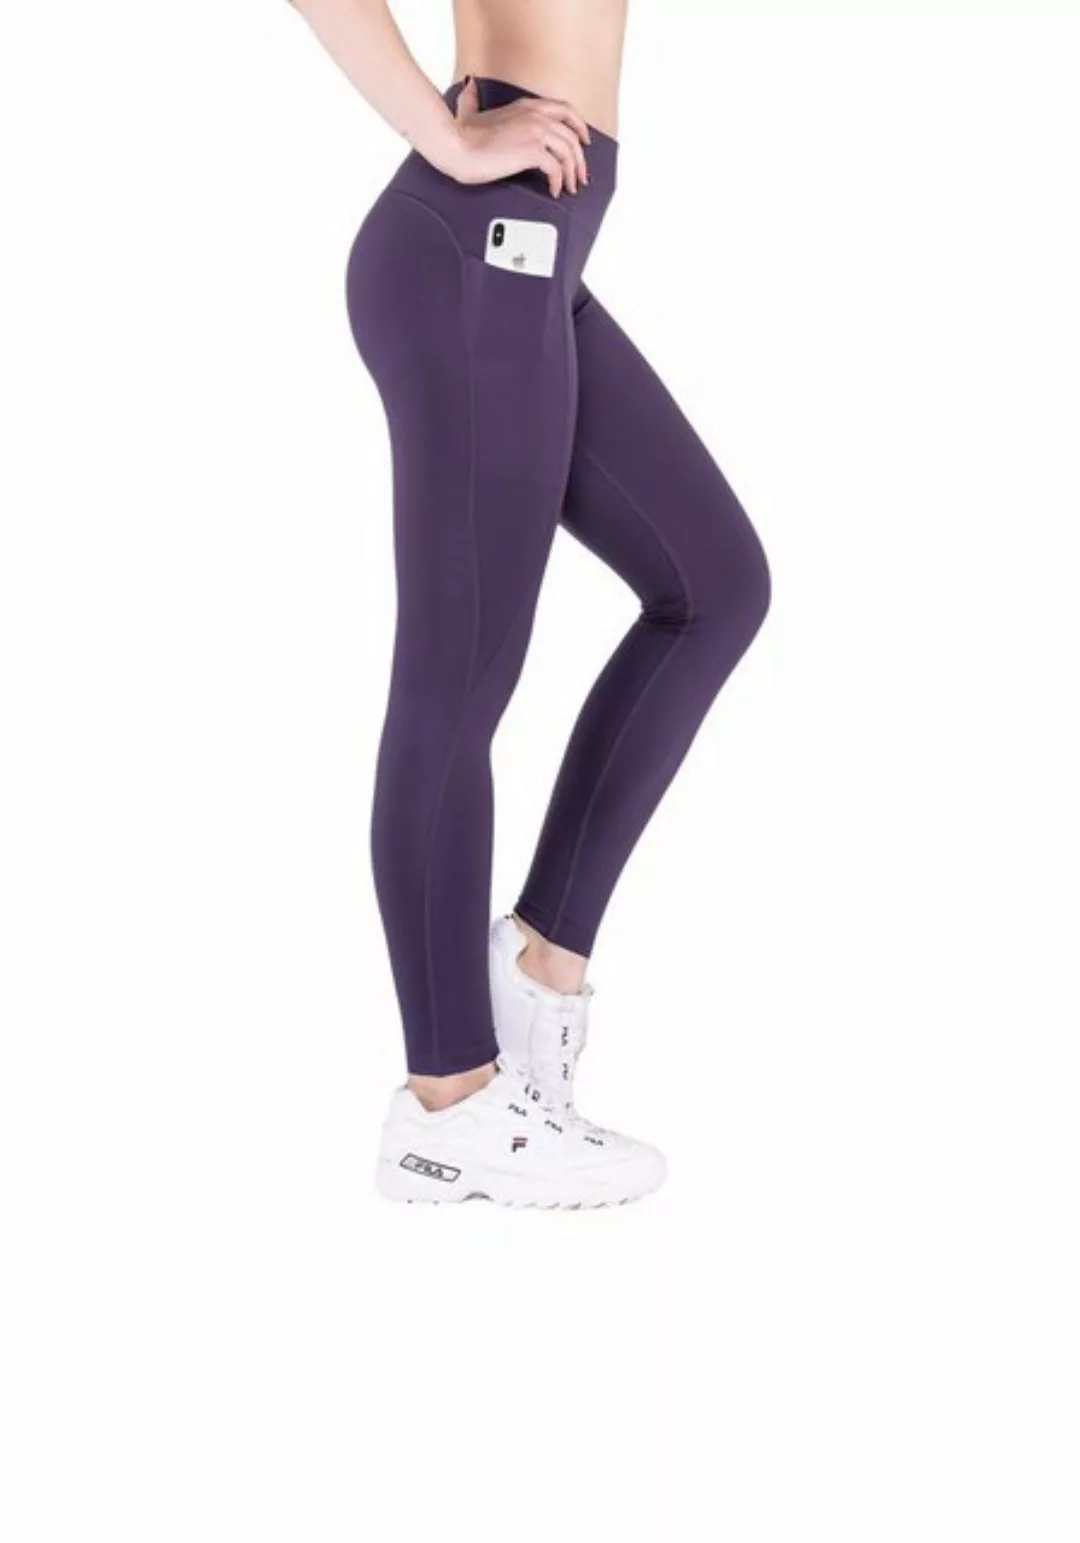 VS Variosports Yogaleggings Damen Yoga sport leggings lang mit Handytasche günstig online kaufen